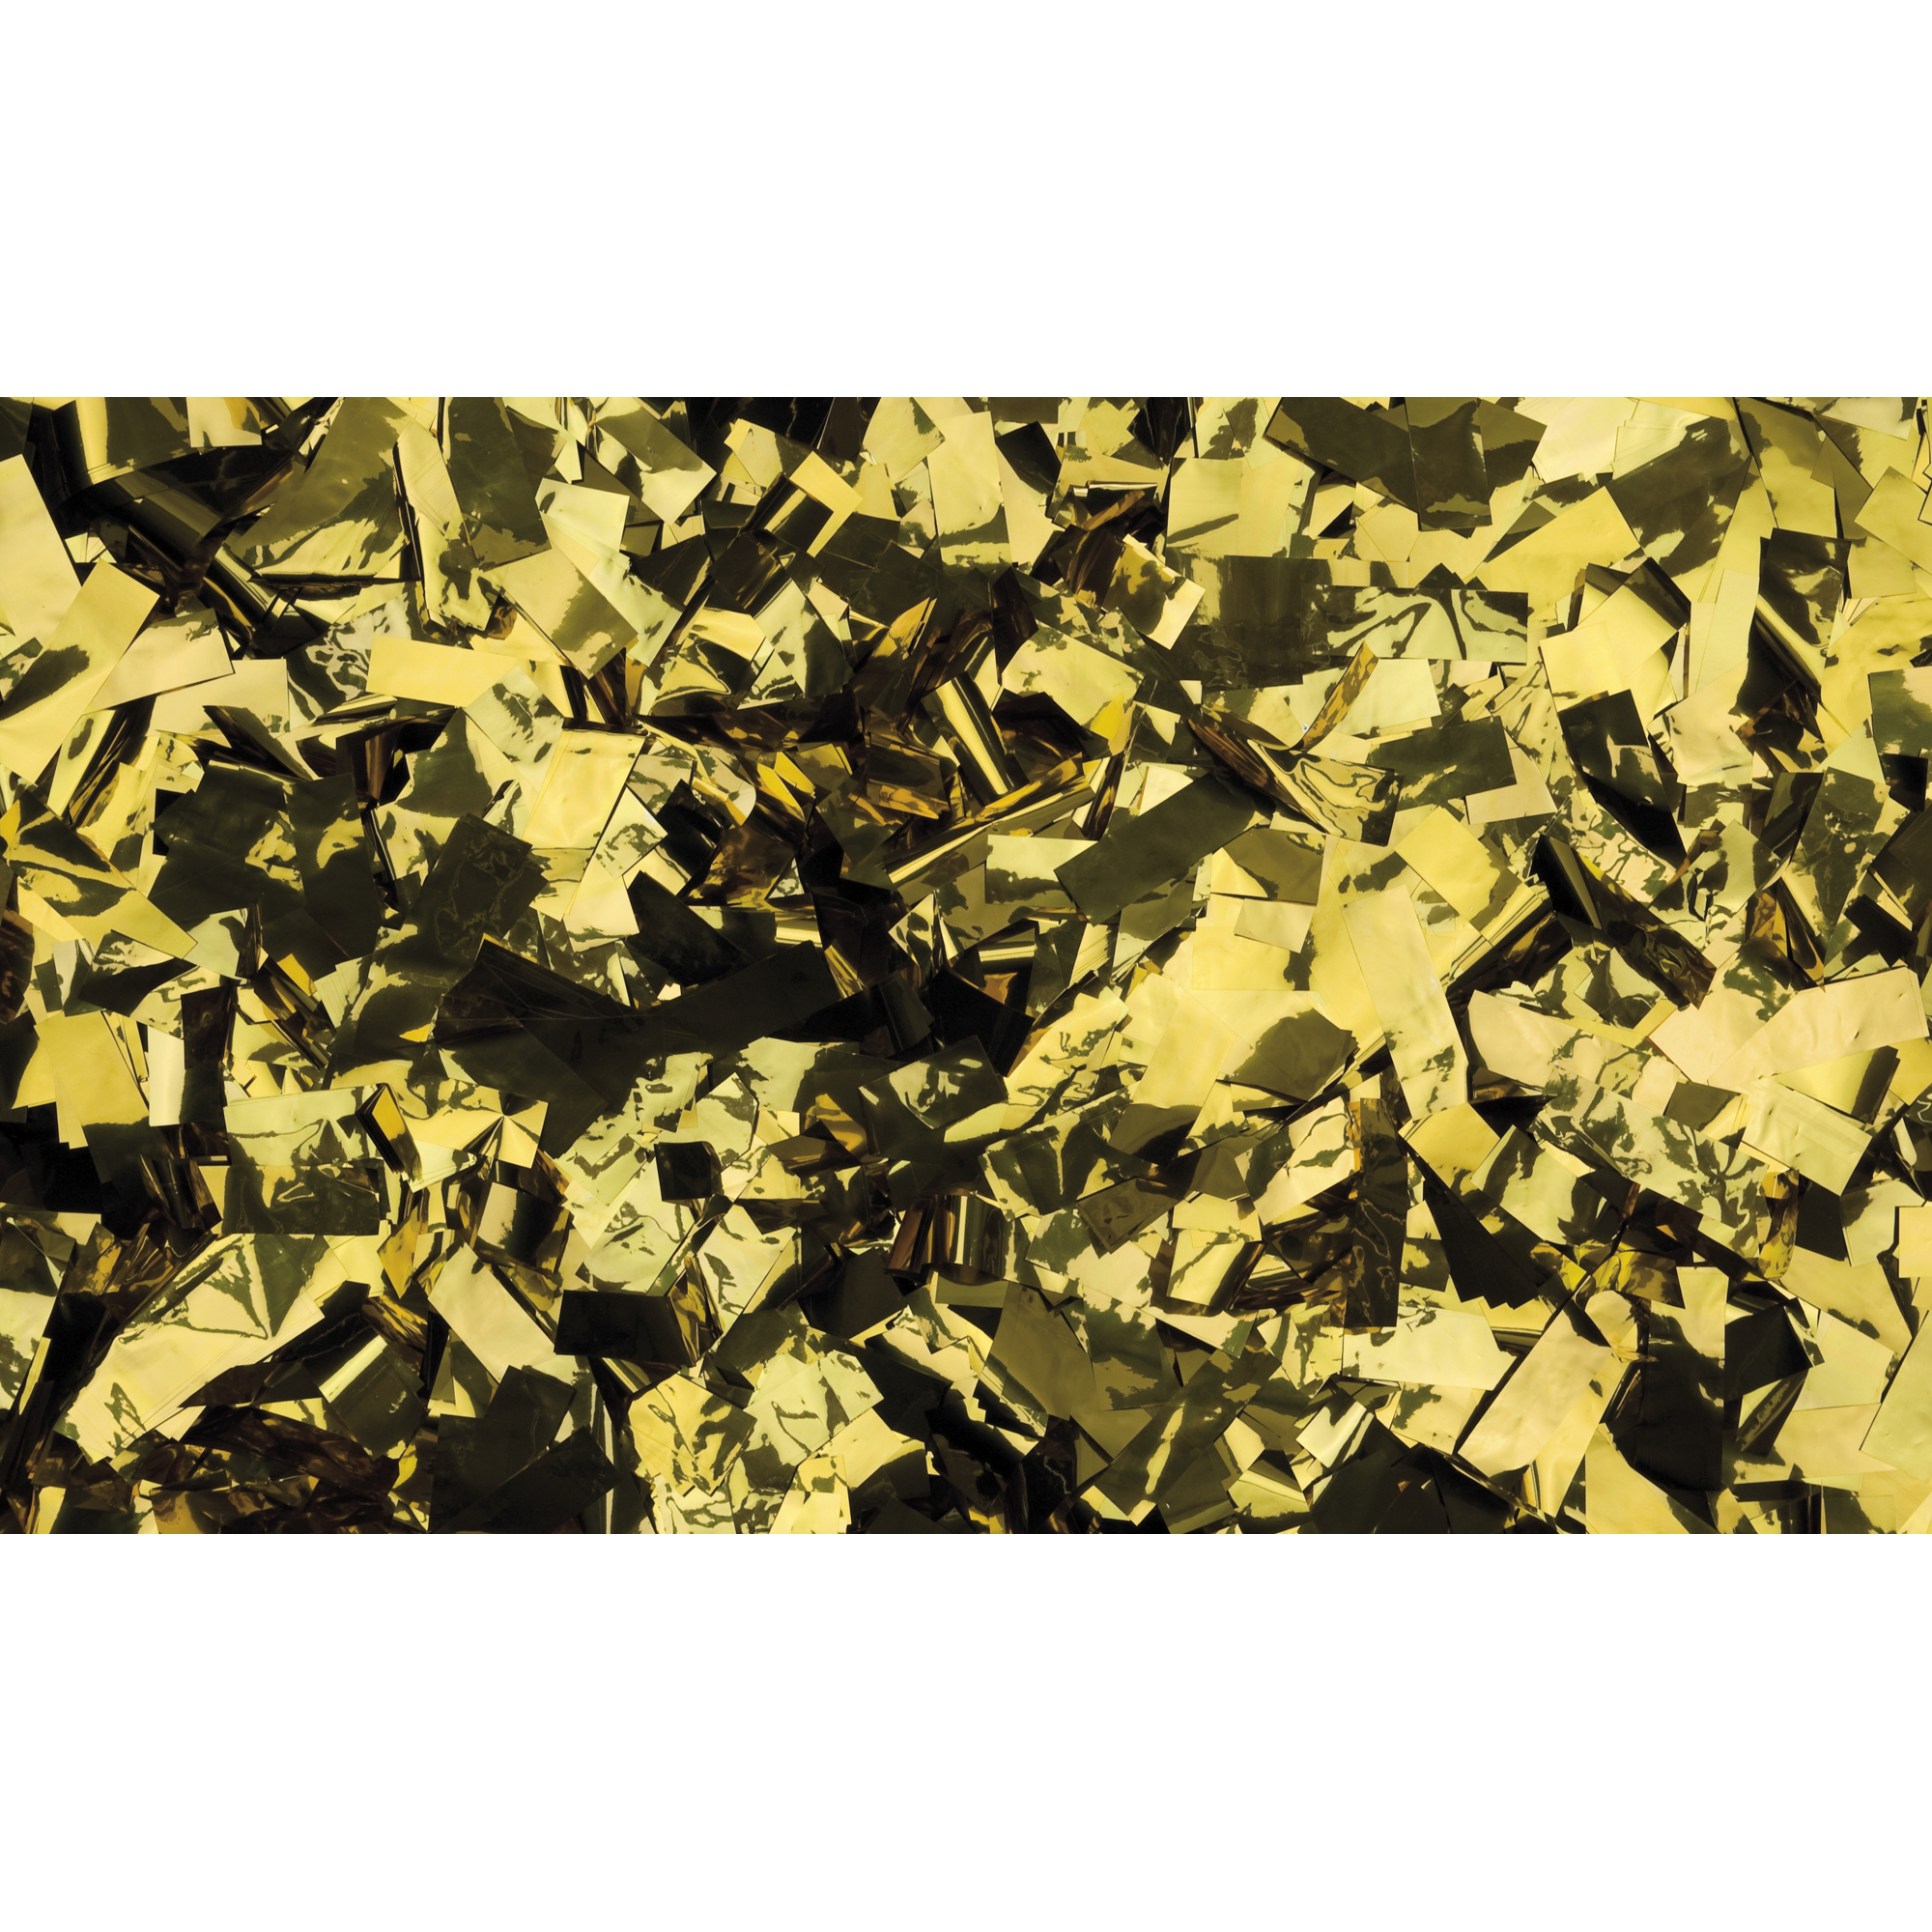 Showgear Metallic Confetti - Rectangle Gold, 55 x 17 mm, 1 kg, feuerhemmend